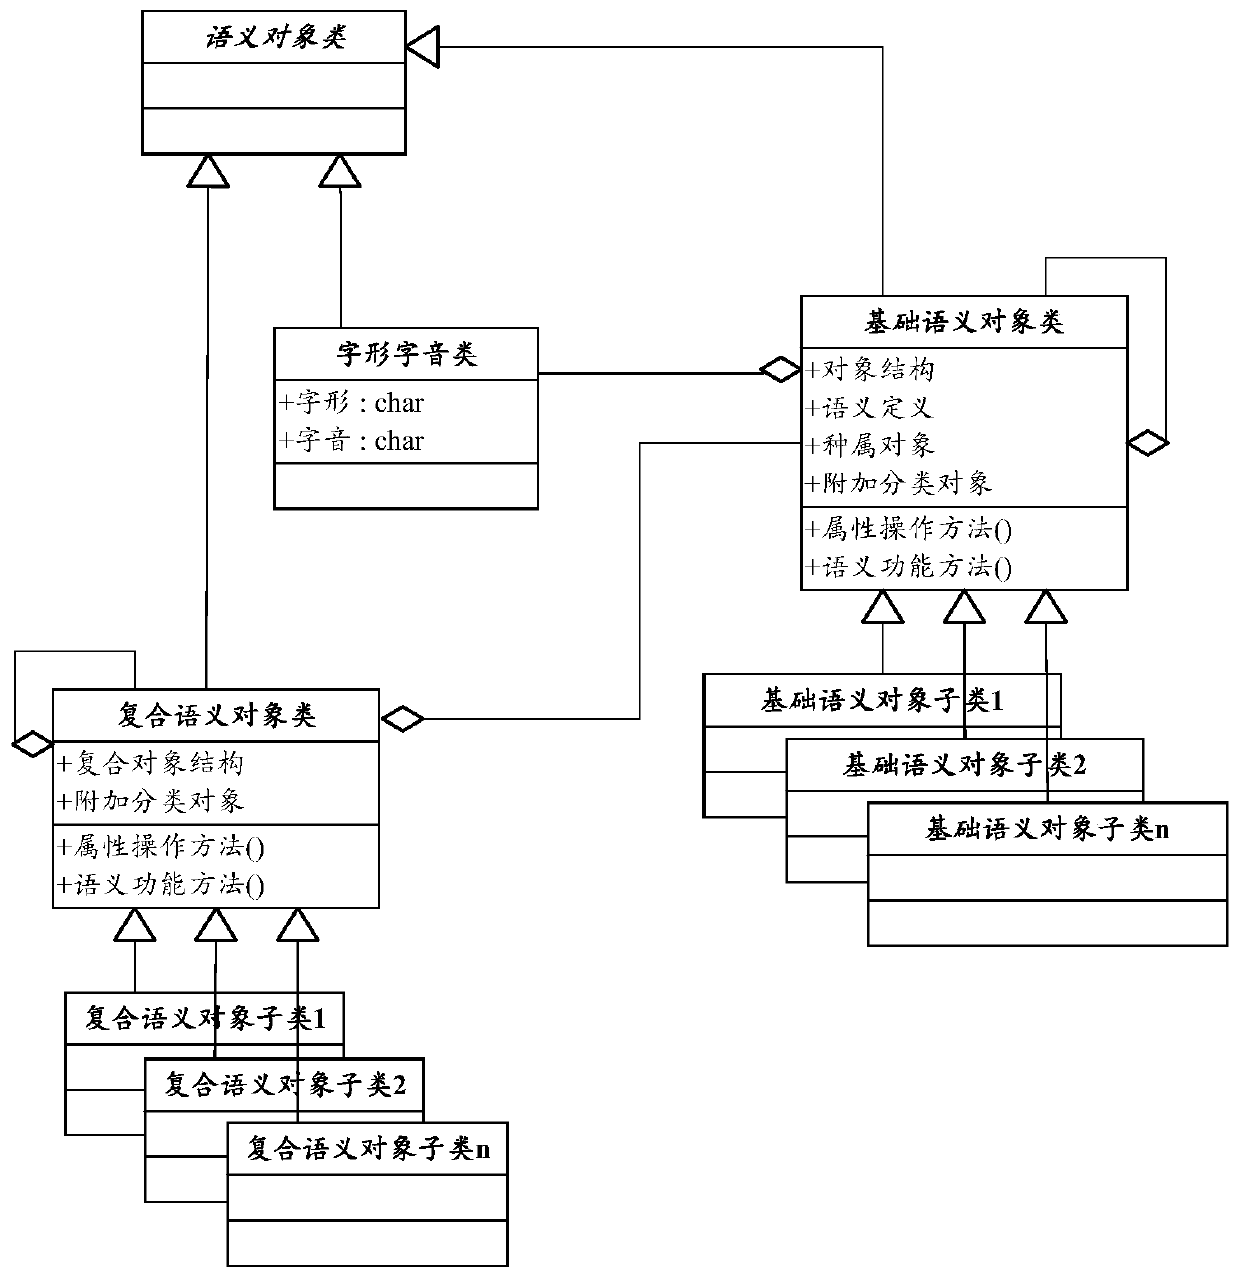 Construction method of semantic recursion representation system of natural language